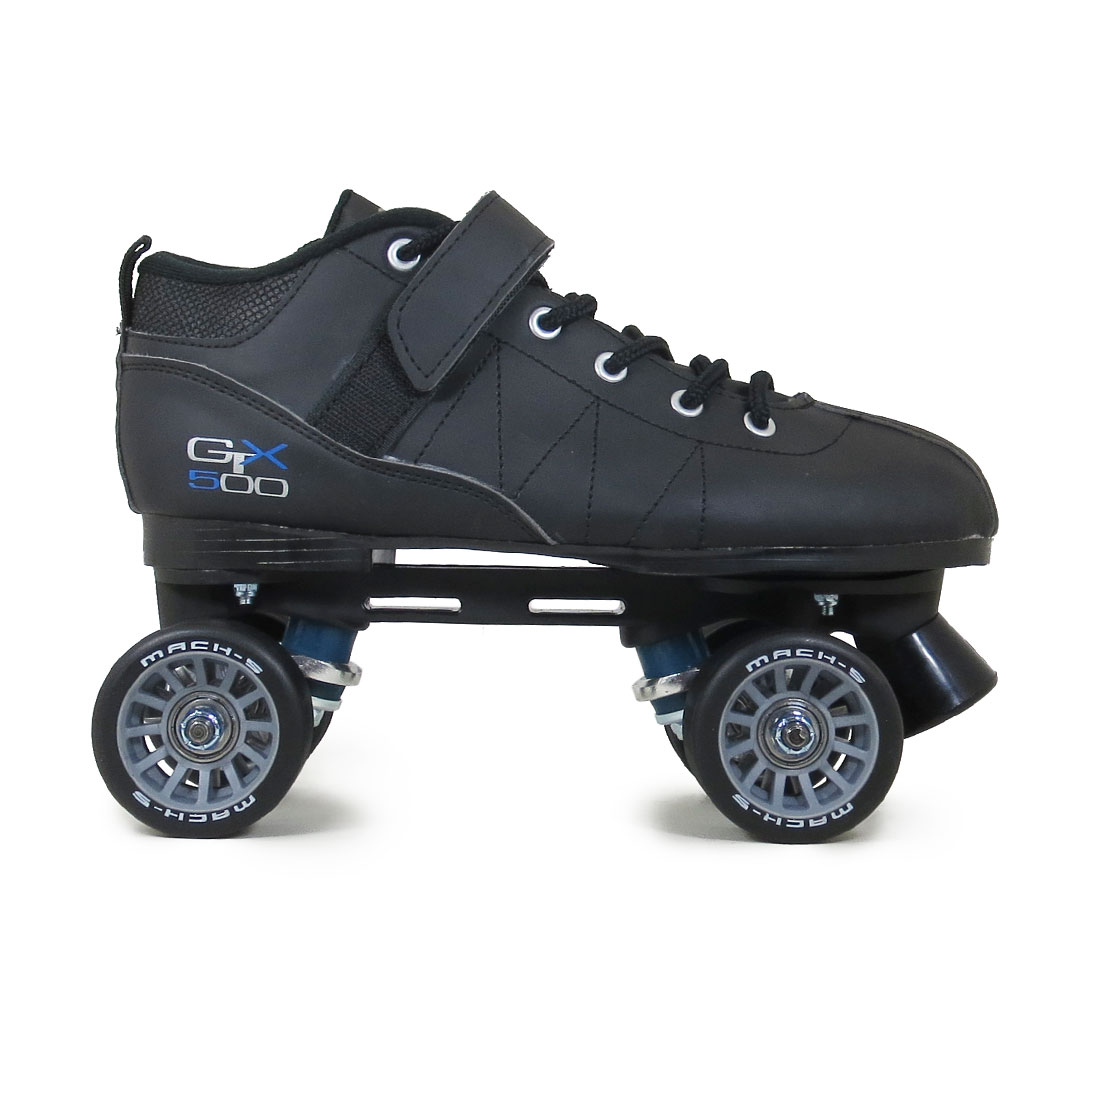 Pacer GTX-500 Quad Roller Skates